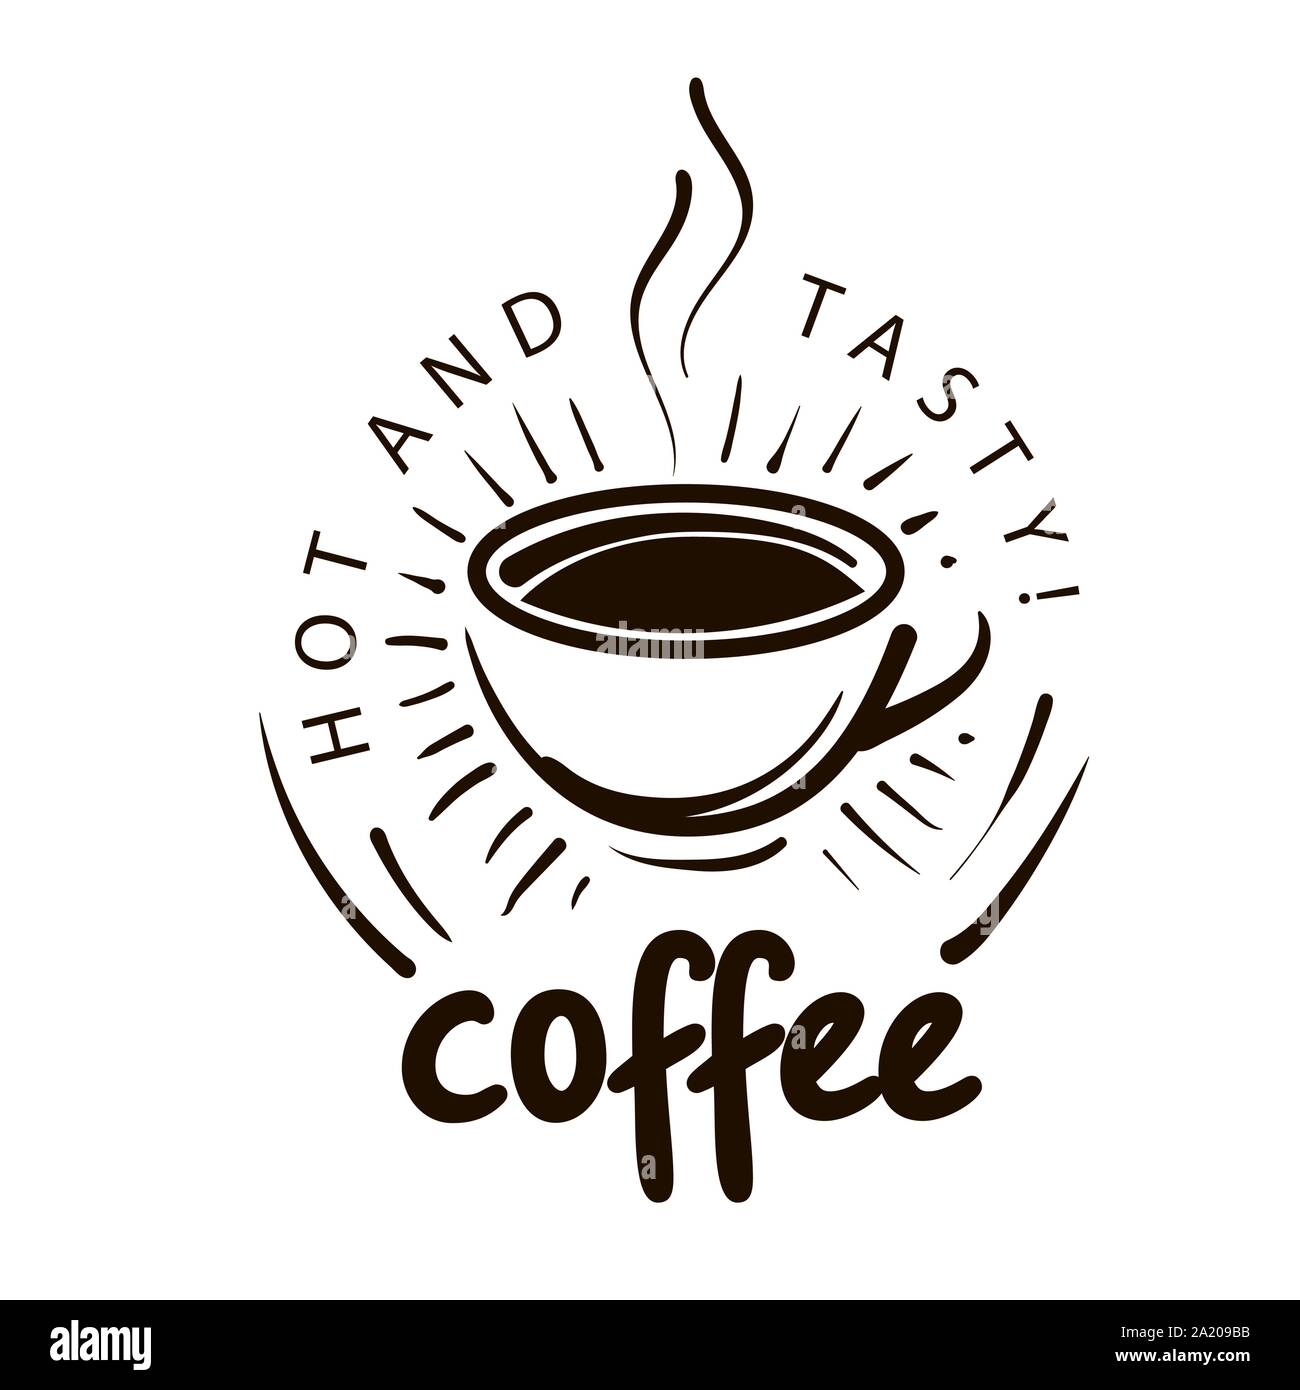 Coffee logo. Vector illustration on white background Stock Vector ...